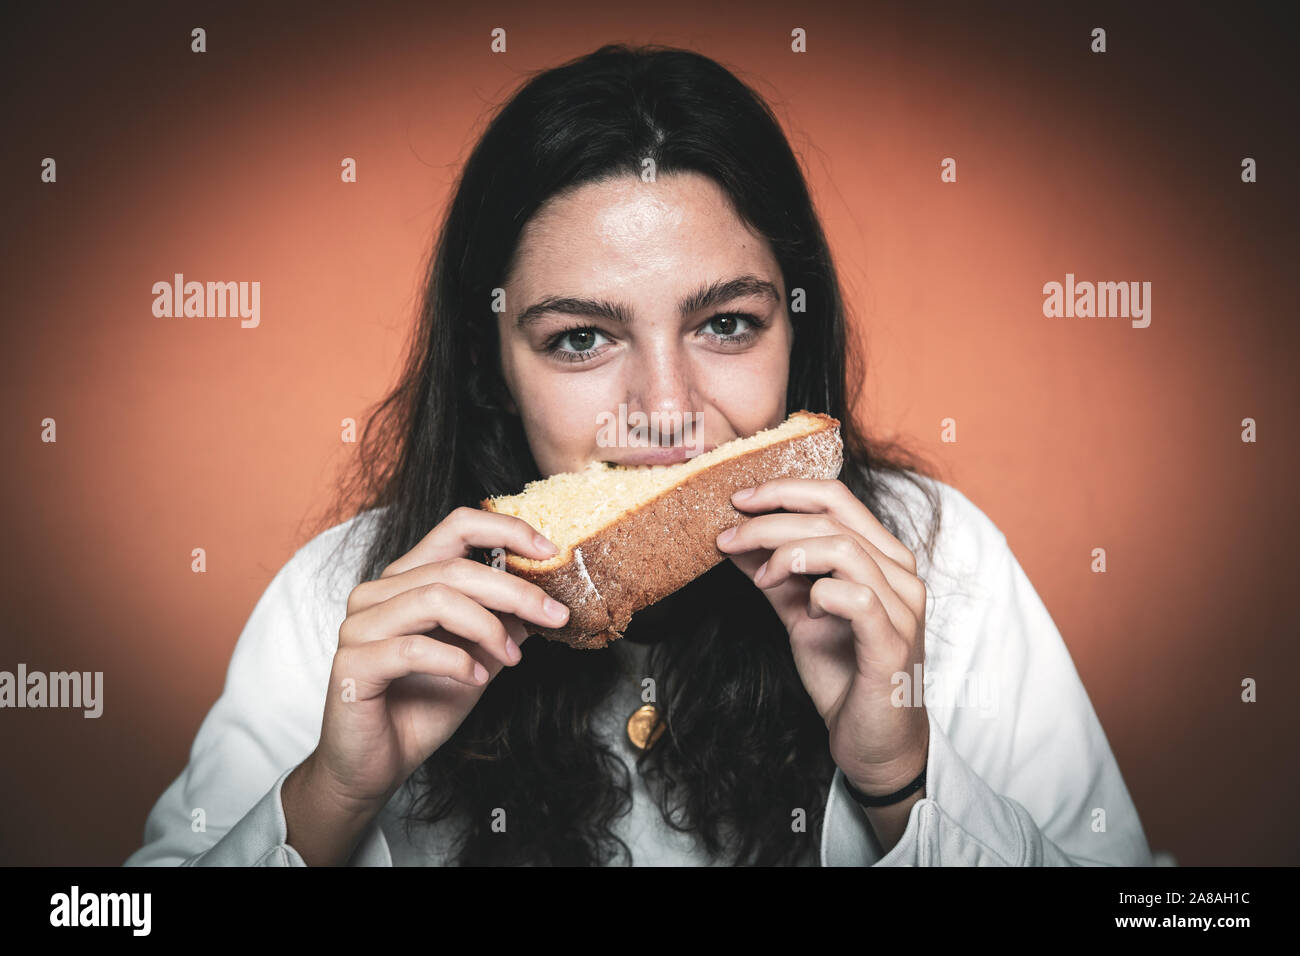 Young woman eating a slice of Christmas cake Stock Photo